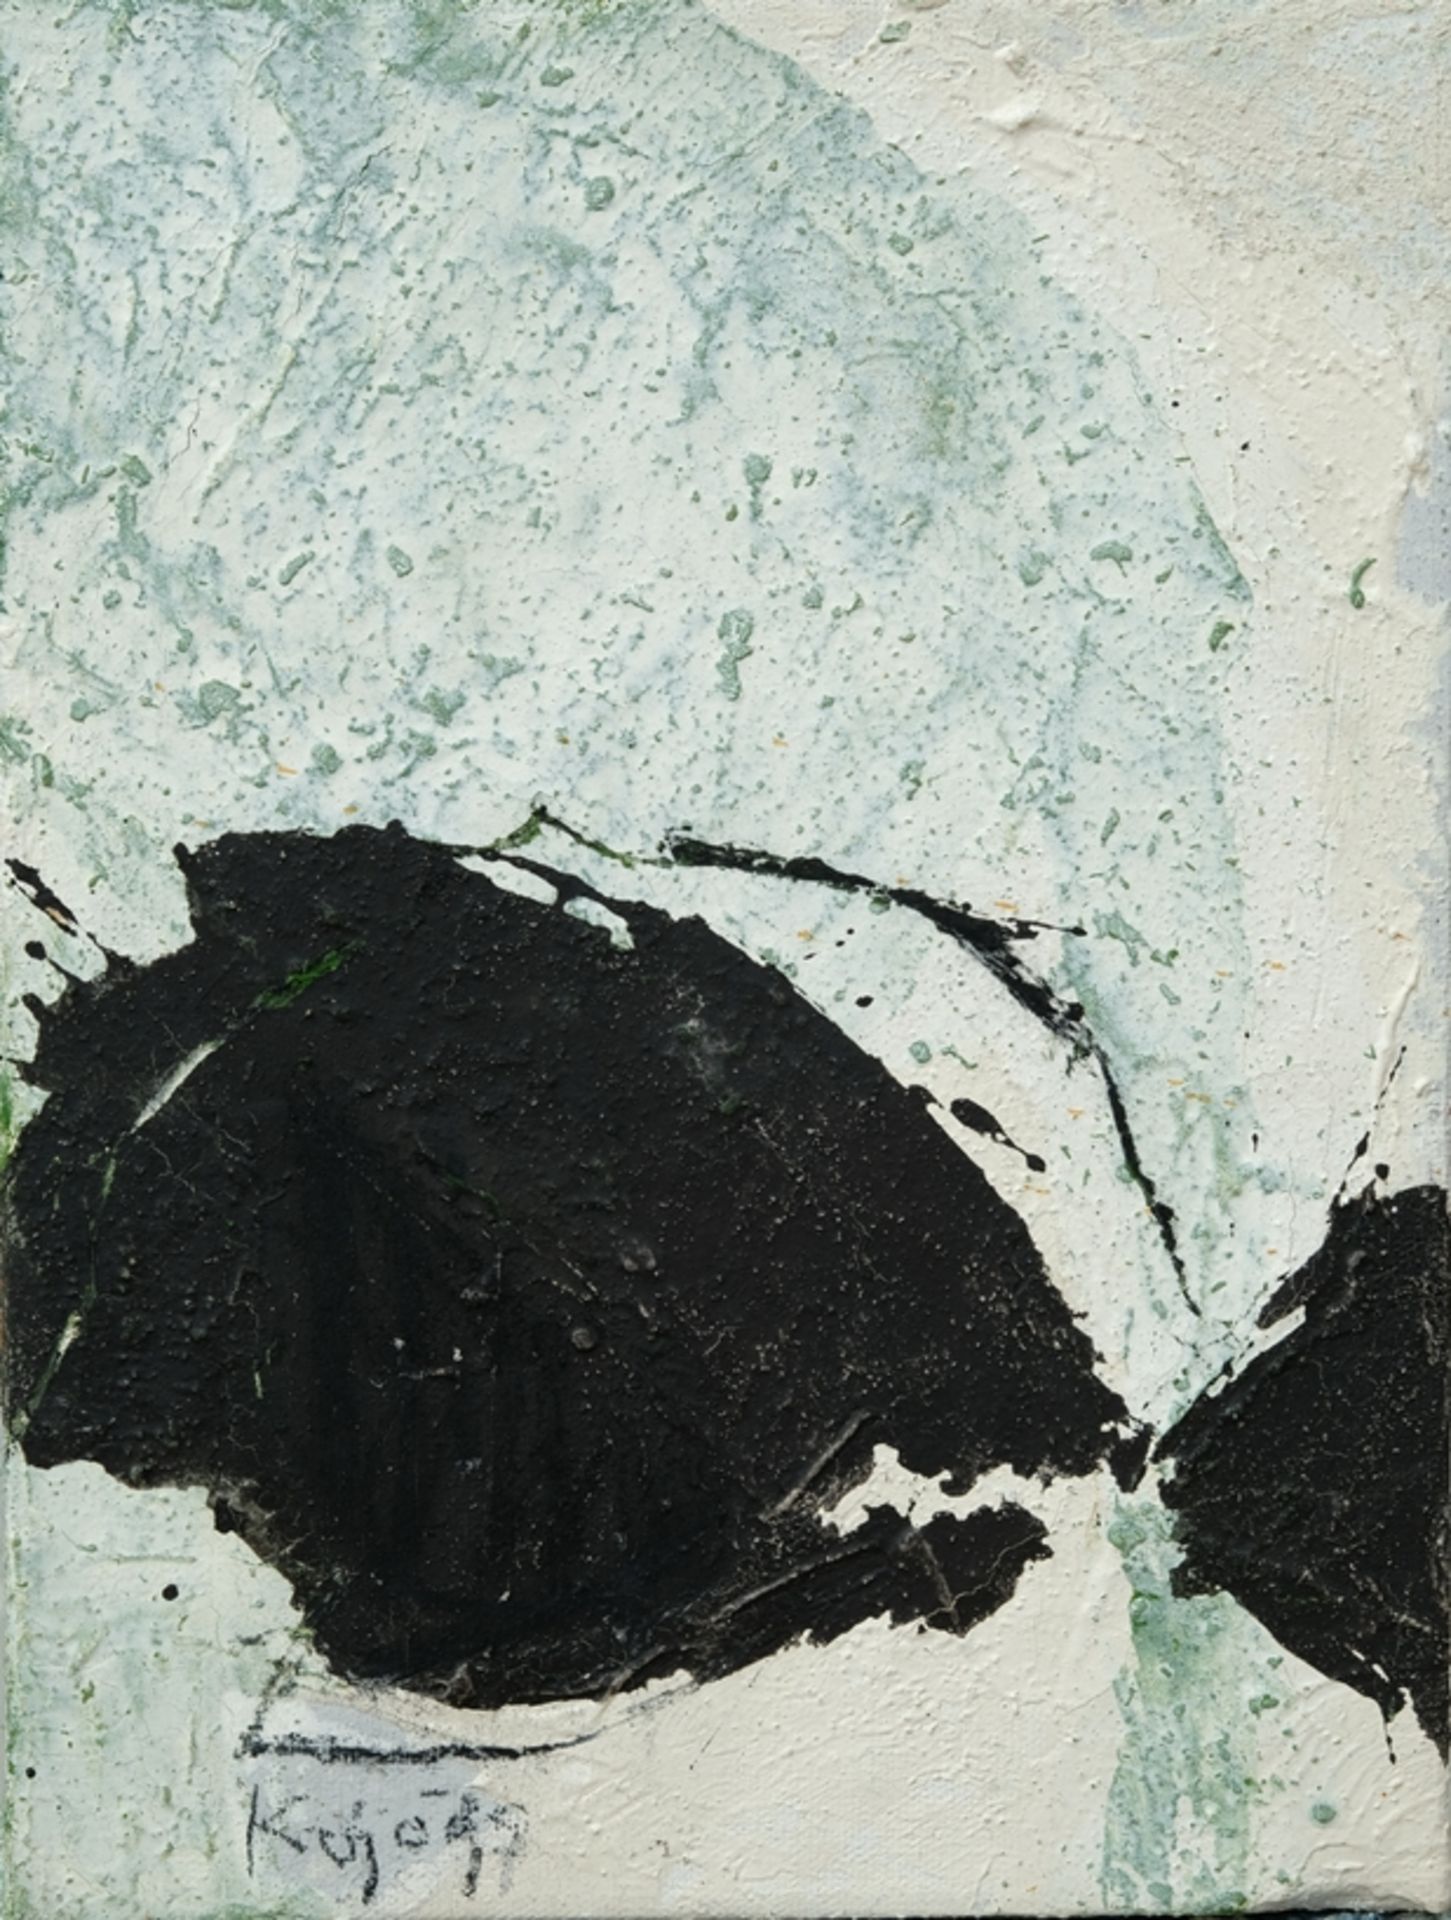 Schrade, Daniel 'Kojo' (1967), undated, mixed media on canvas.